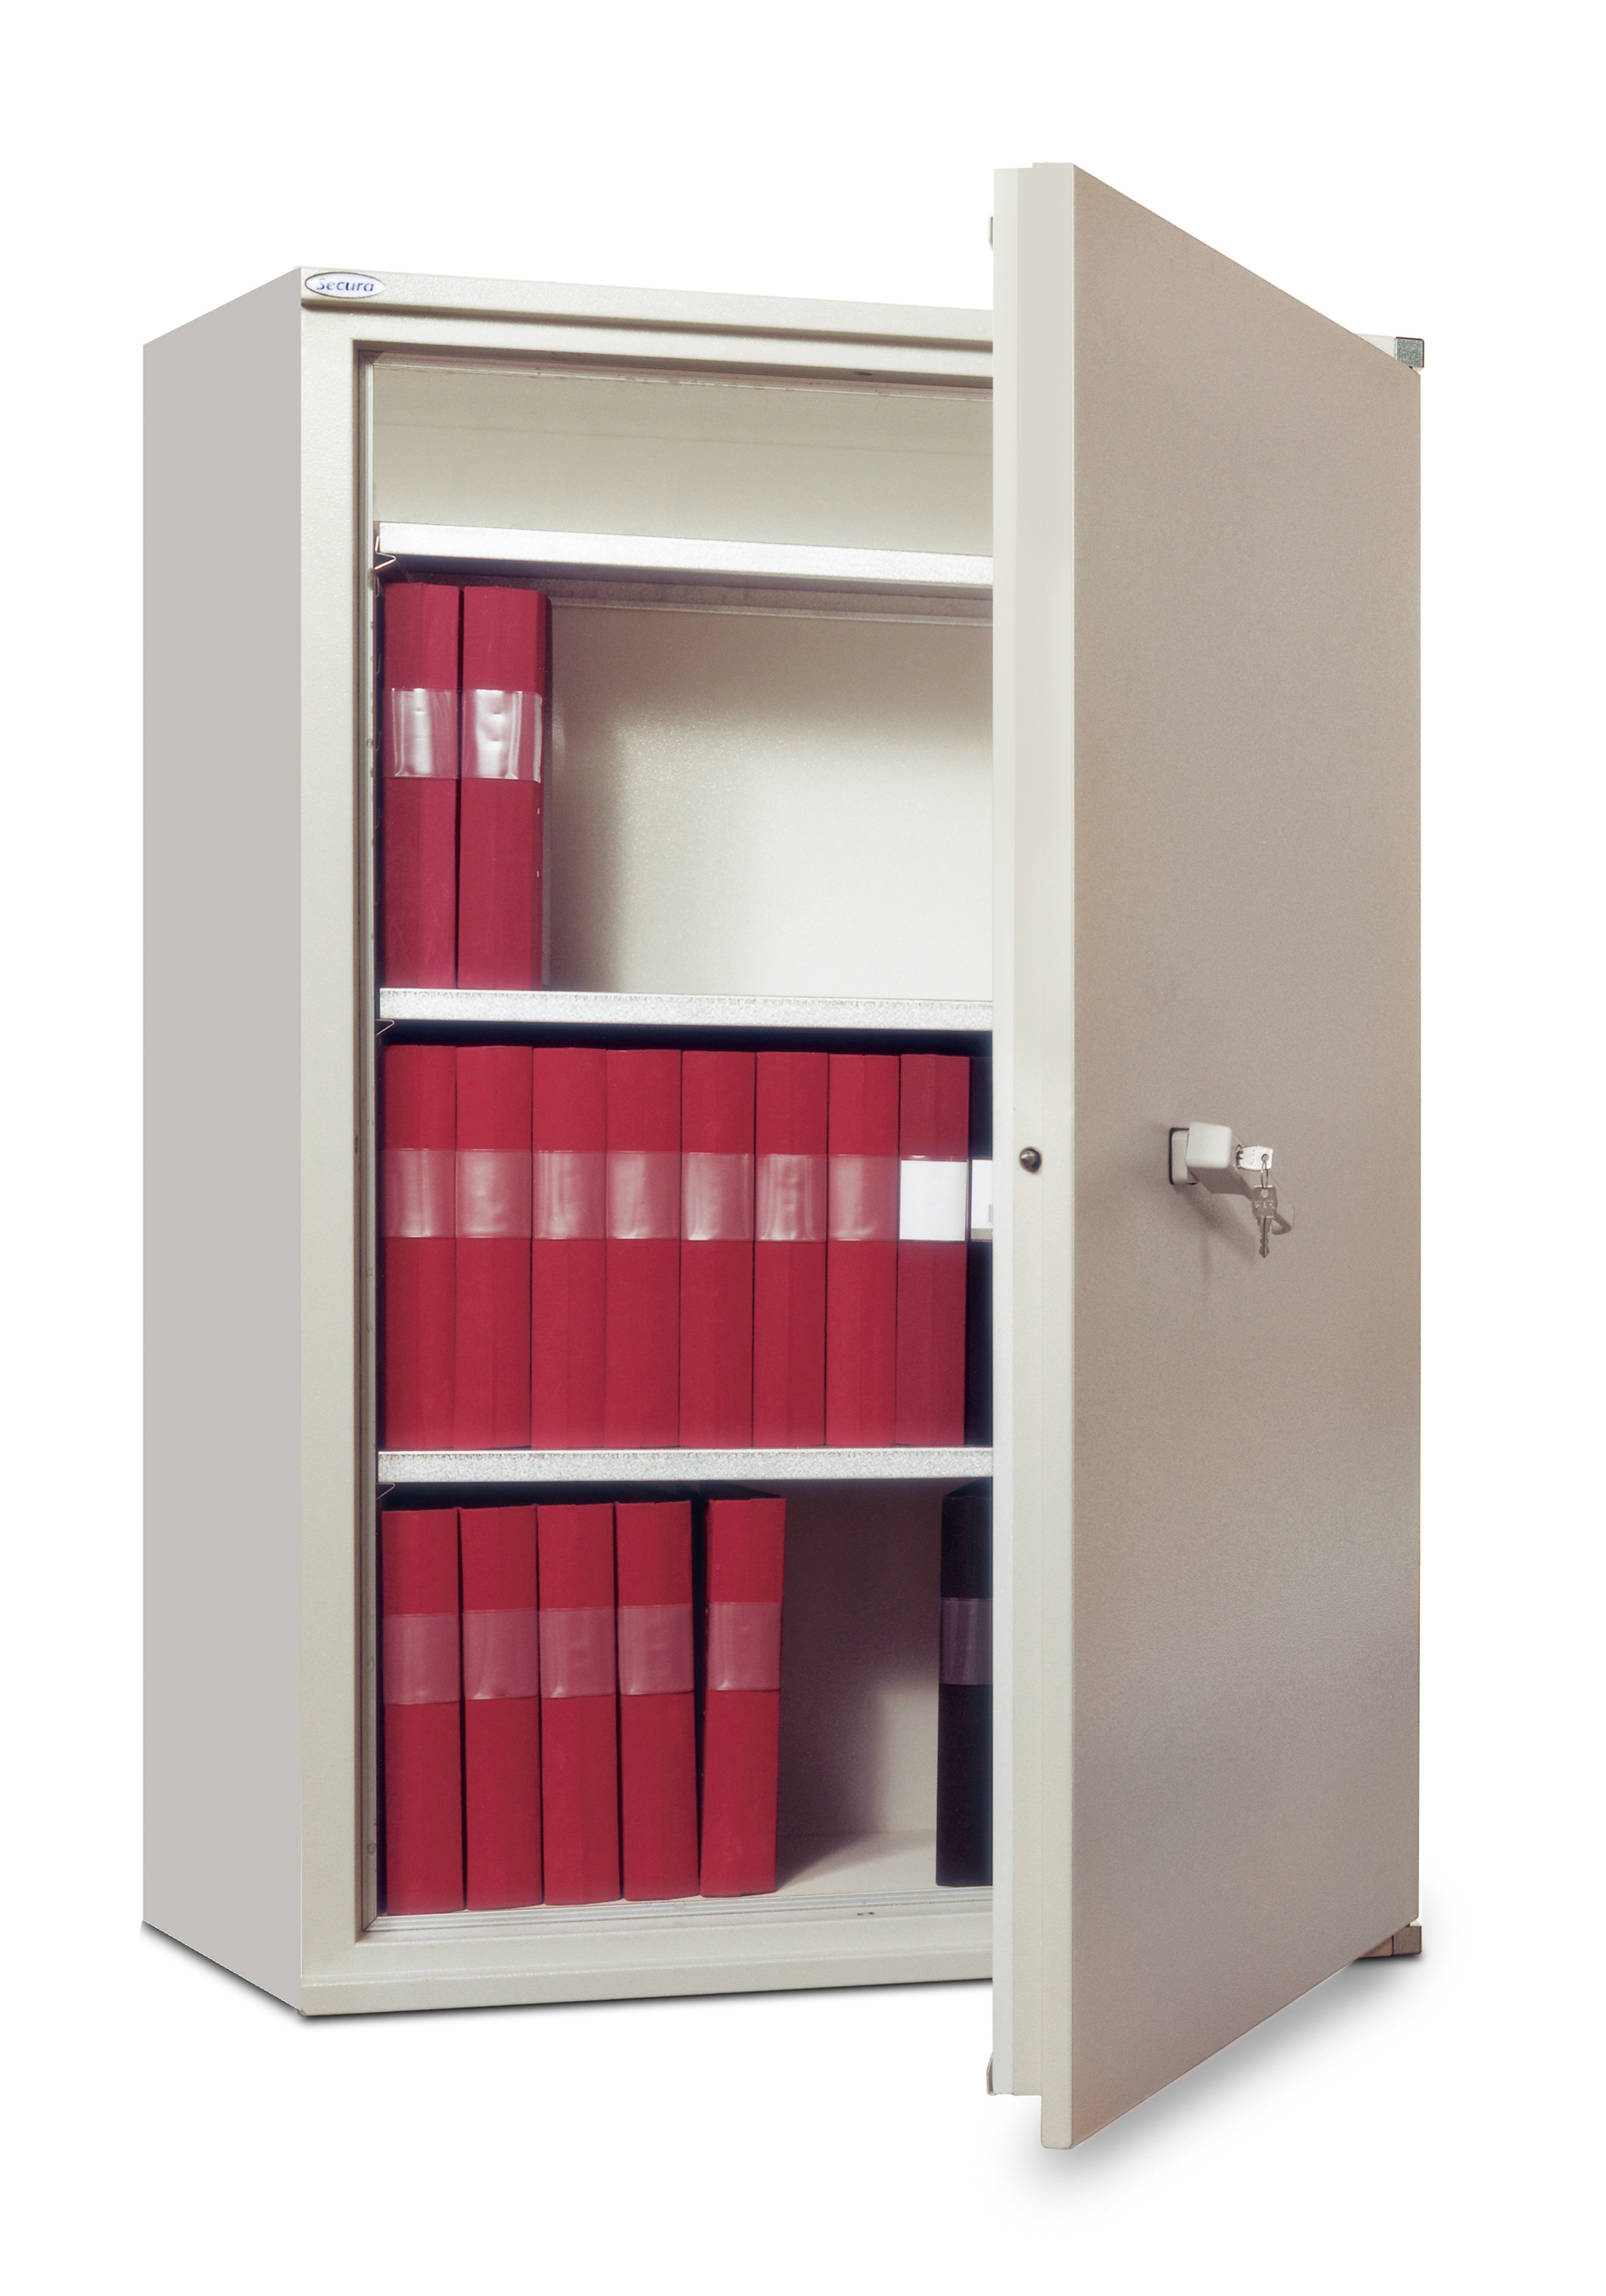 SA 330 SA 390 fire-rated document cabinet